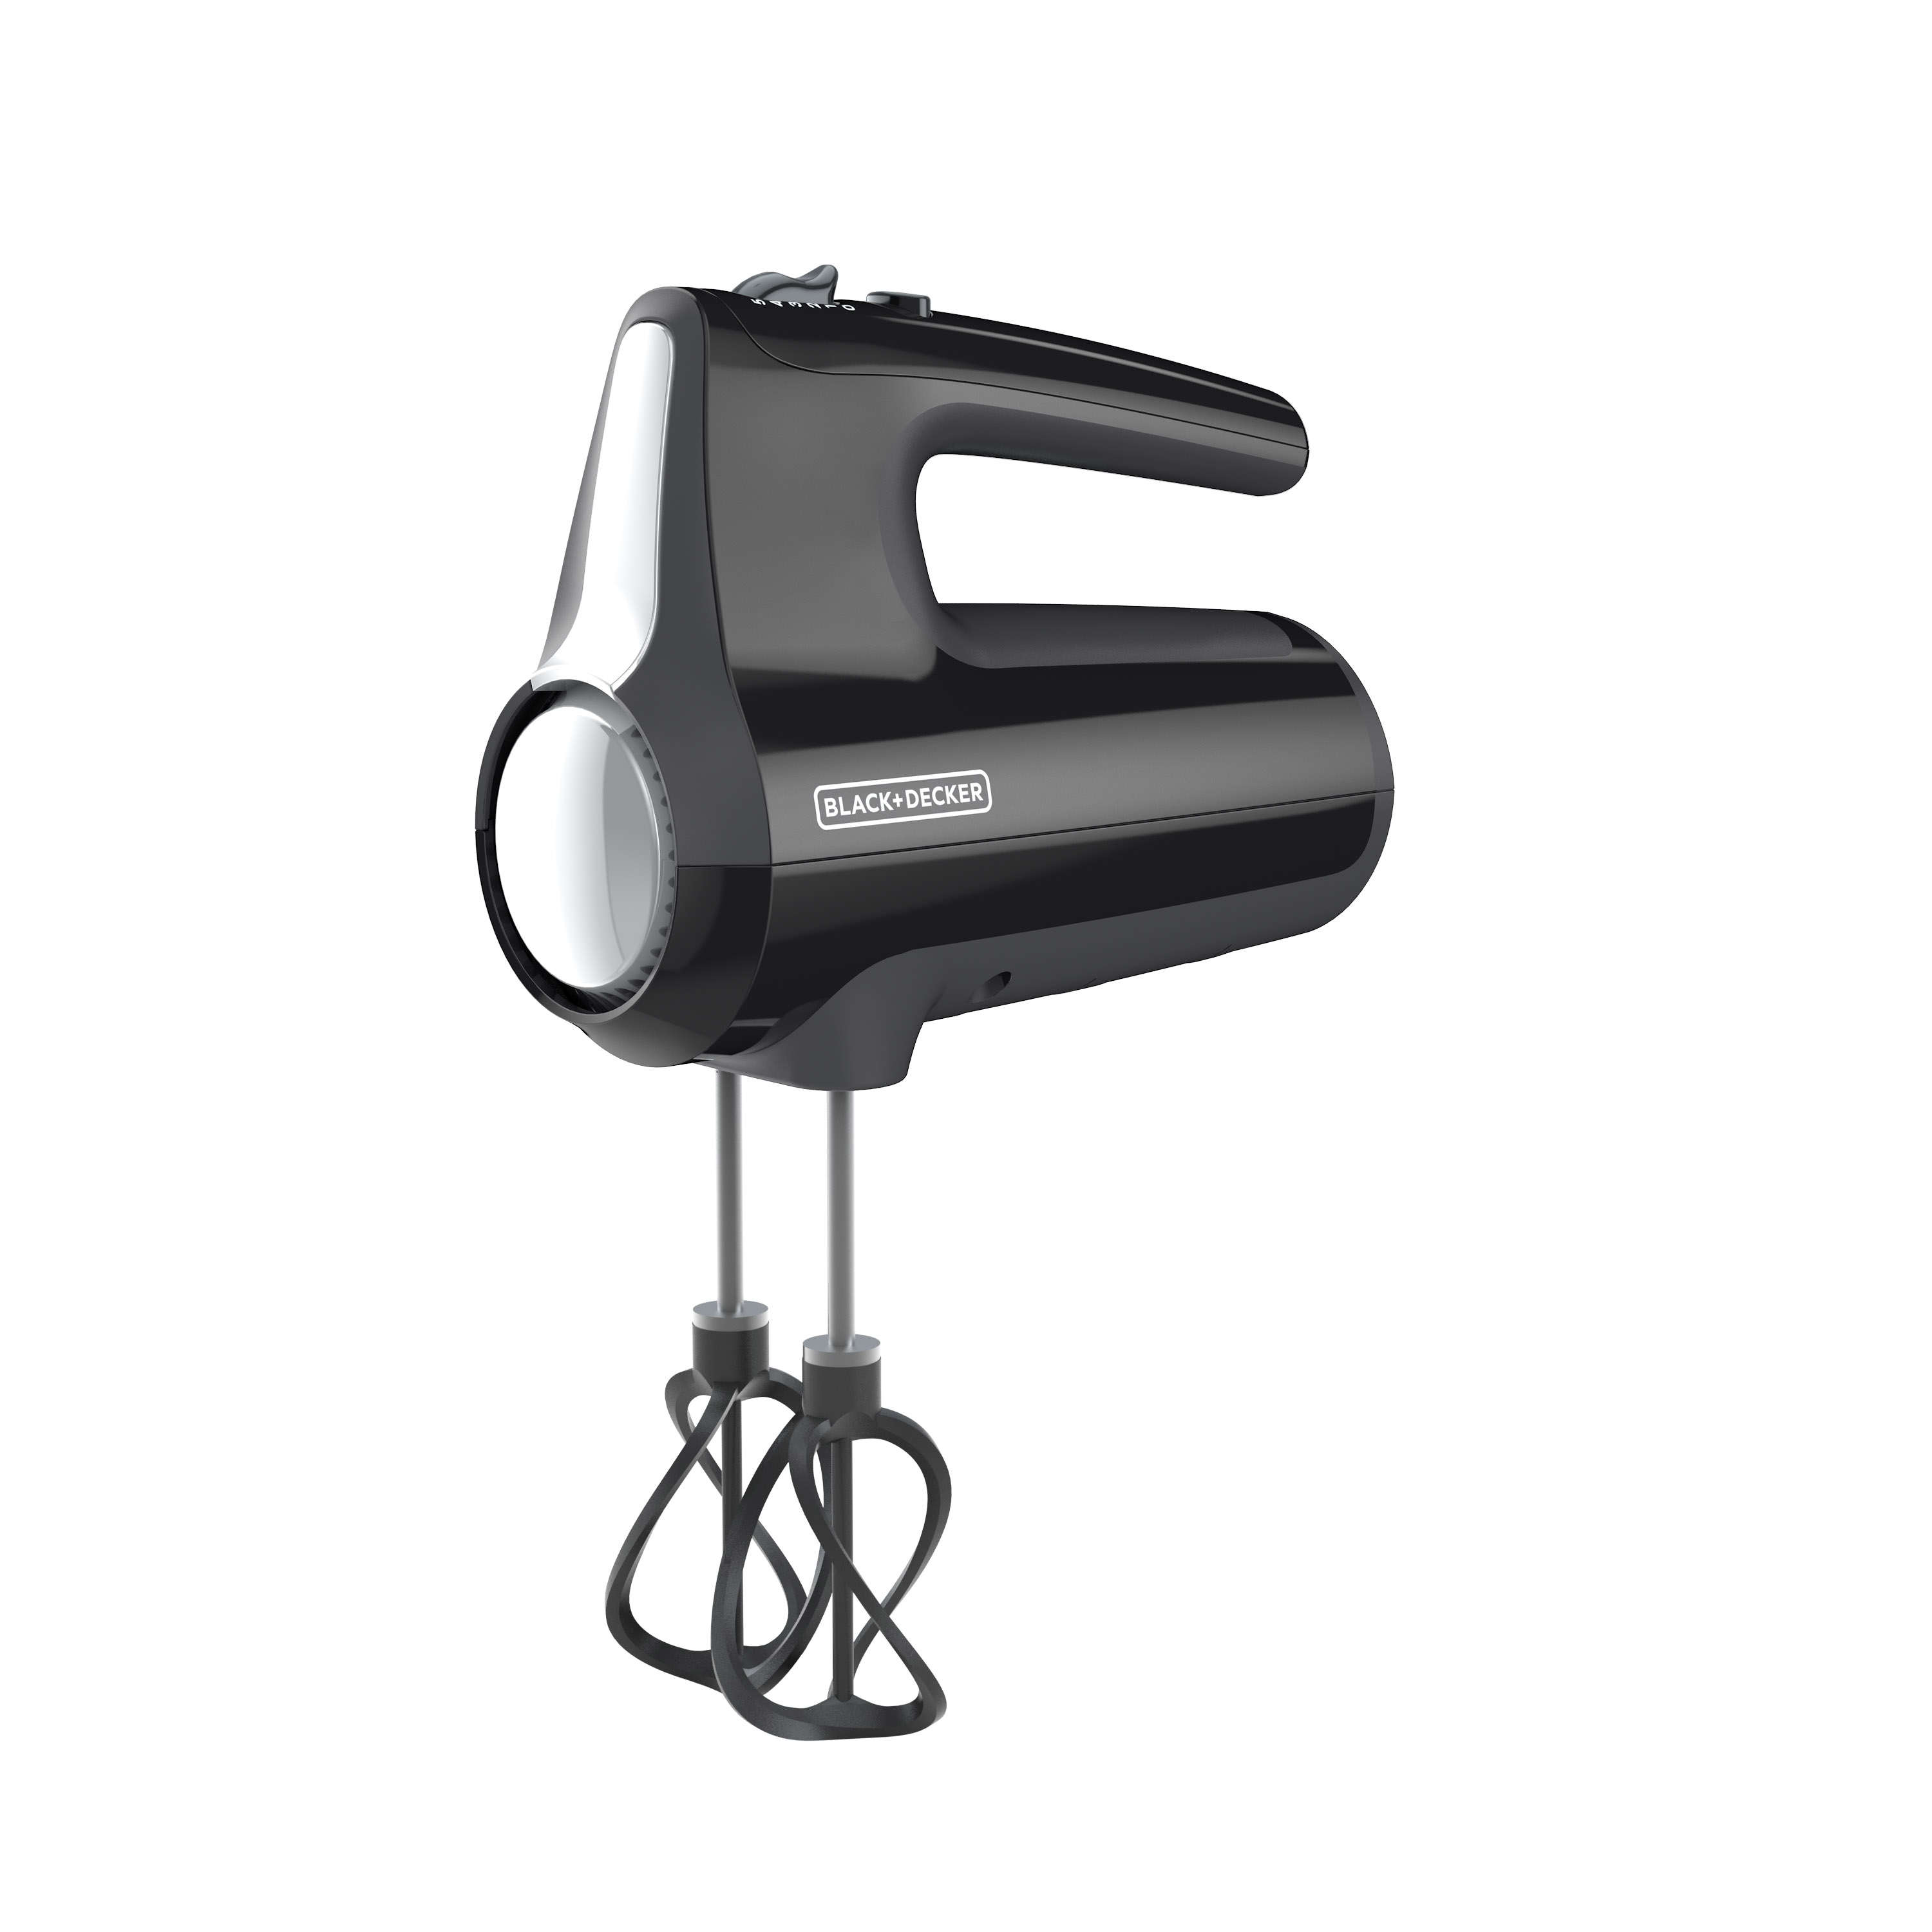 Black + Decker Helix 5 Speed Performance Hand Mixer (Black) $14.10 + FS w/ Walmart+ or orders of $35+